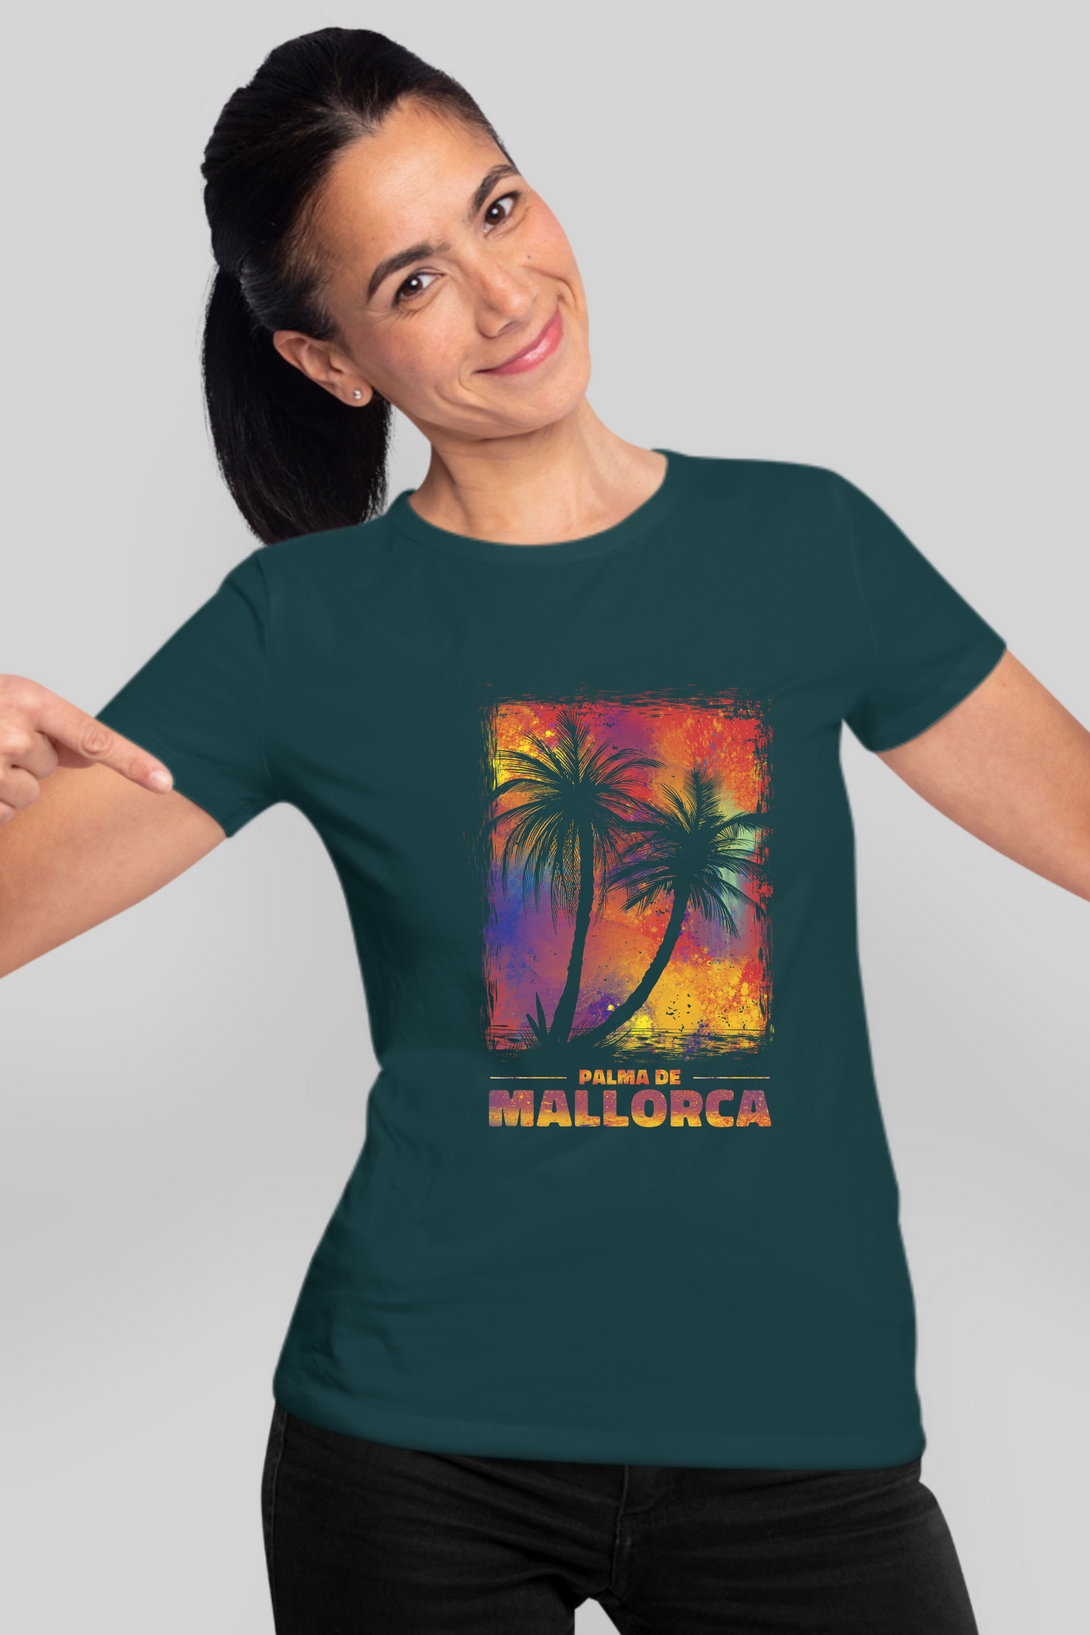 Palma De Mallorca Printed T-Shirt For Women - WowWaves - 8